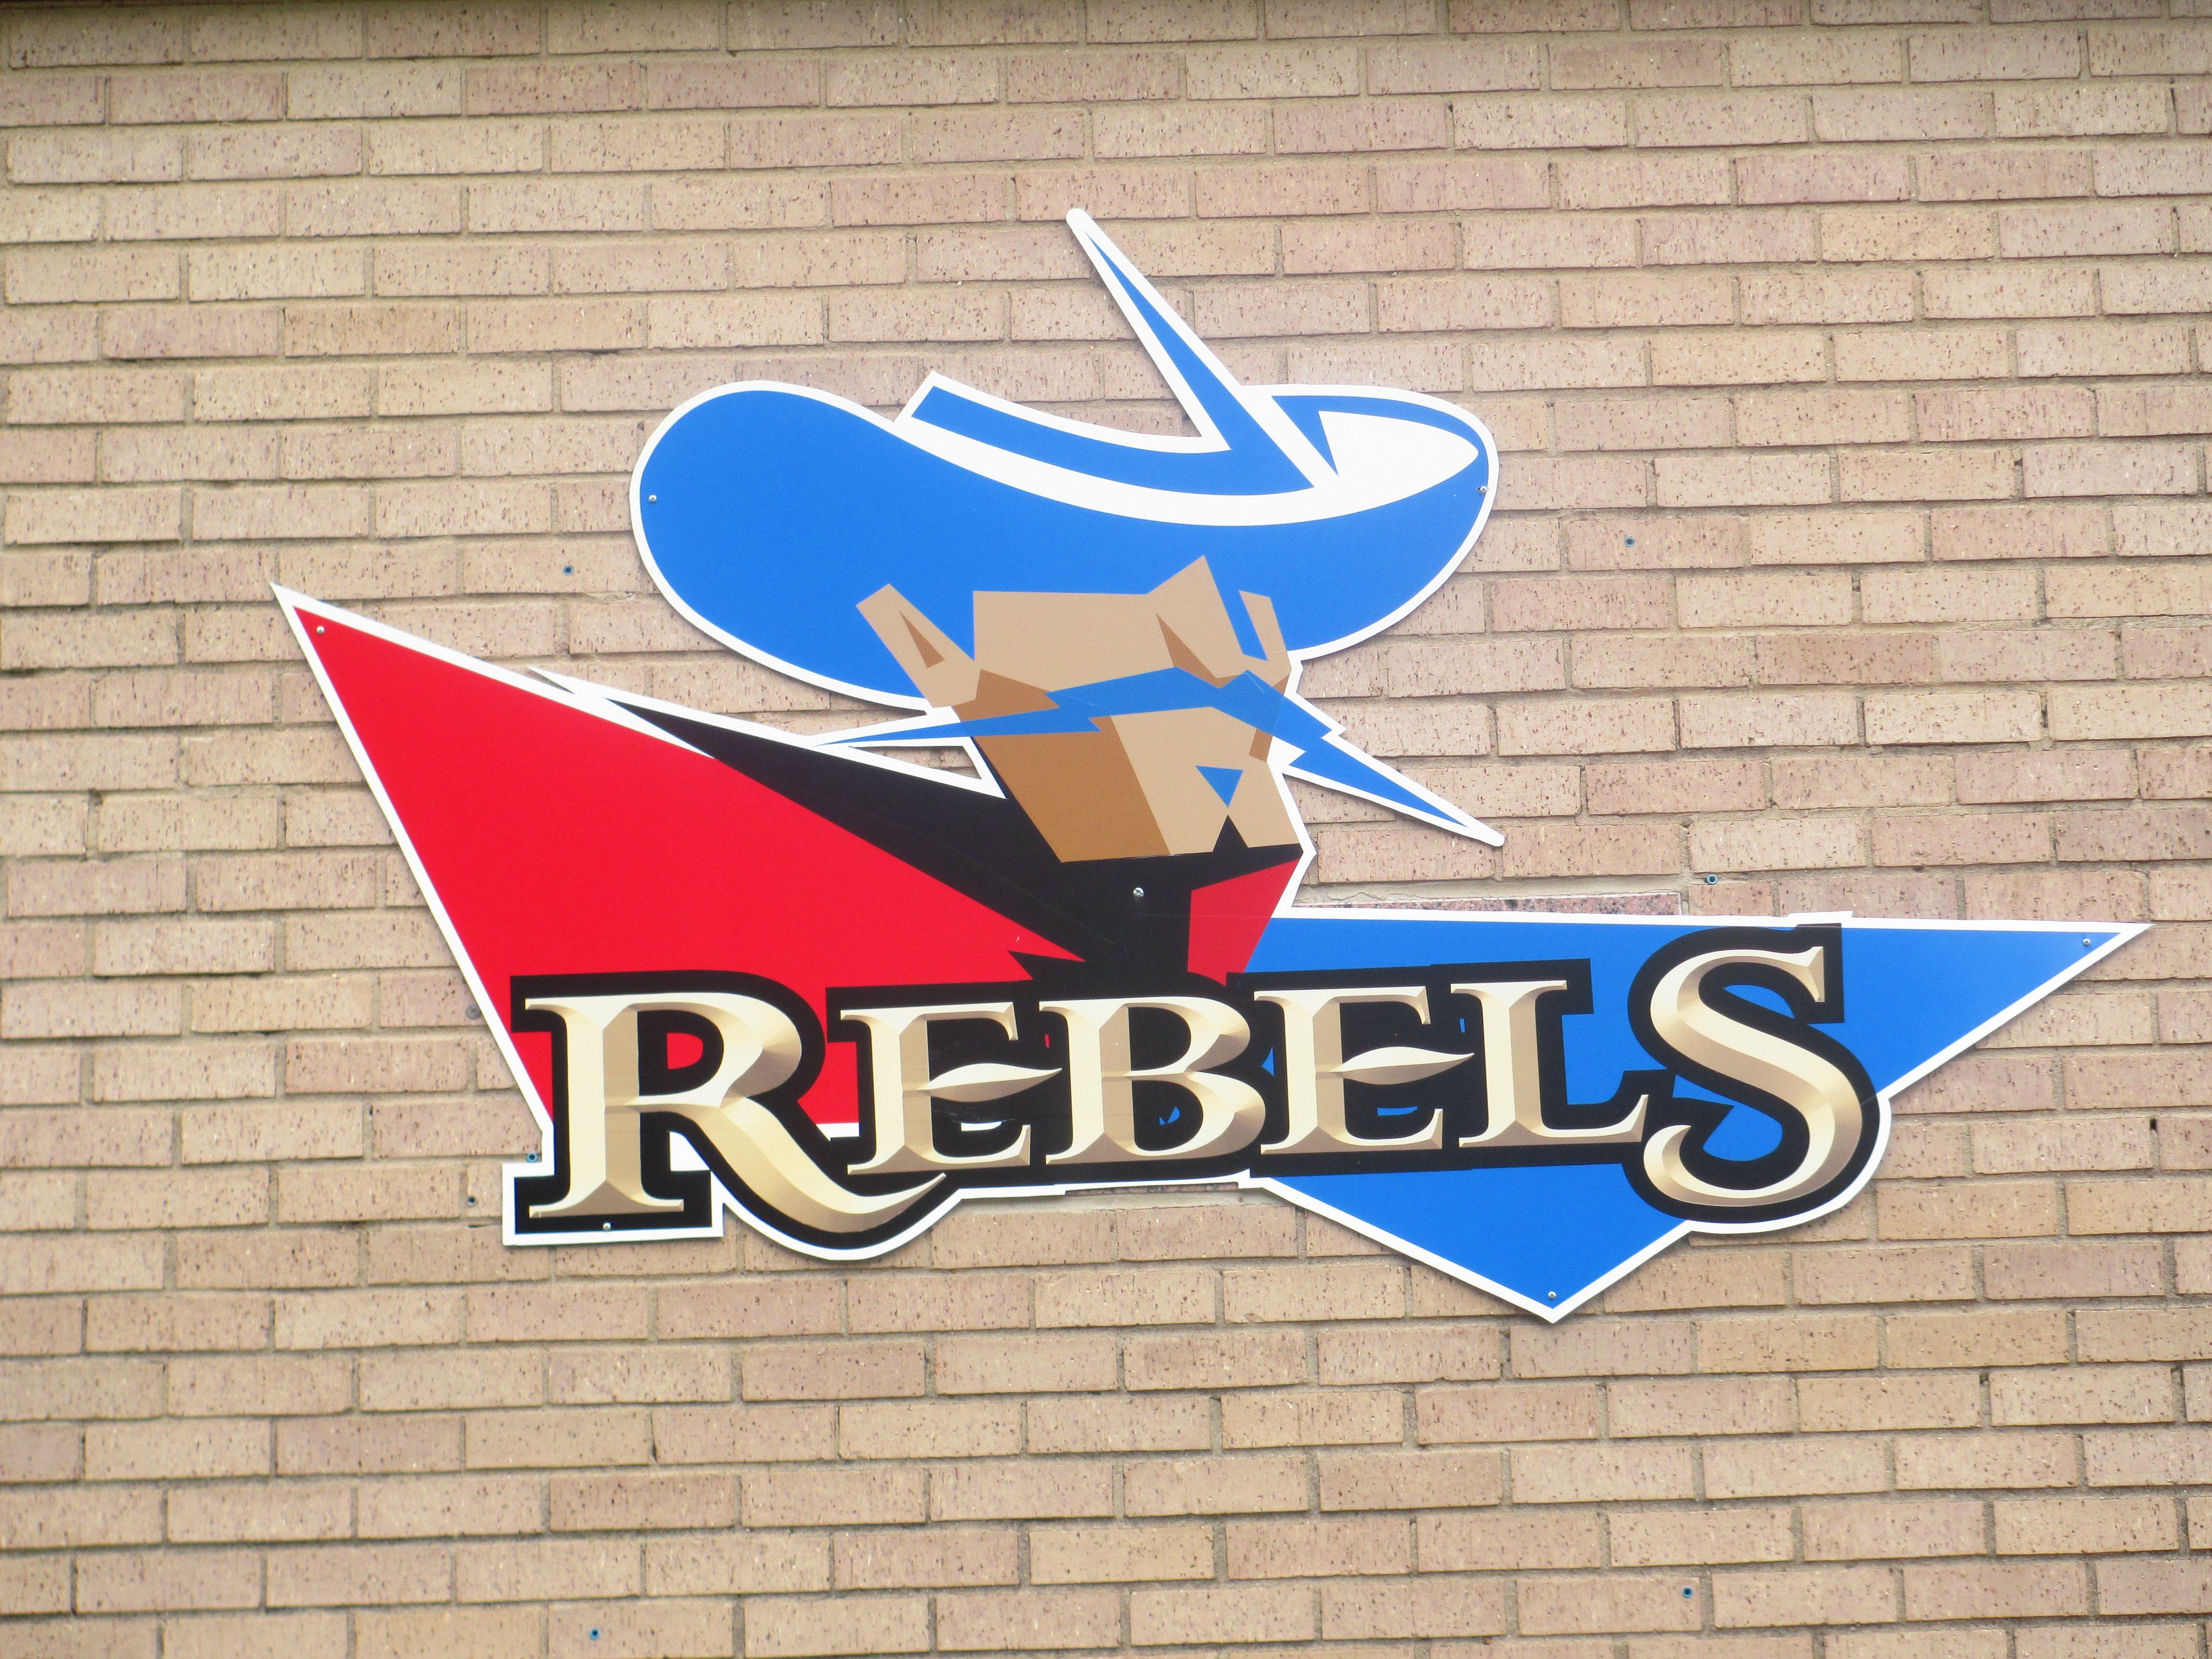 Hill College Logo - File:Hill College (TX) Rebels emblem IMG 5565.JPG - Wikimedia Commons